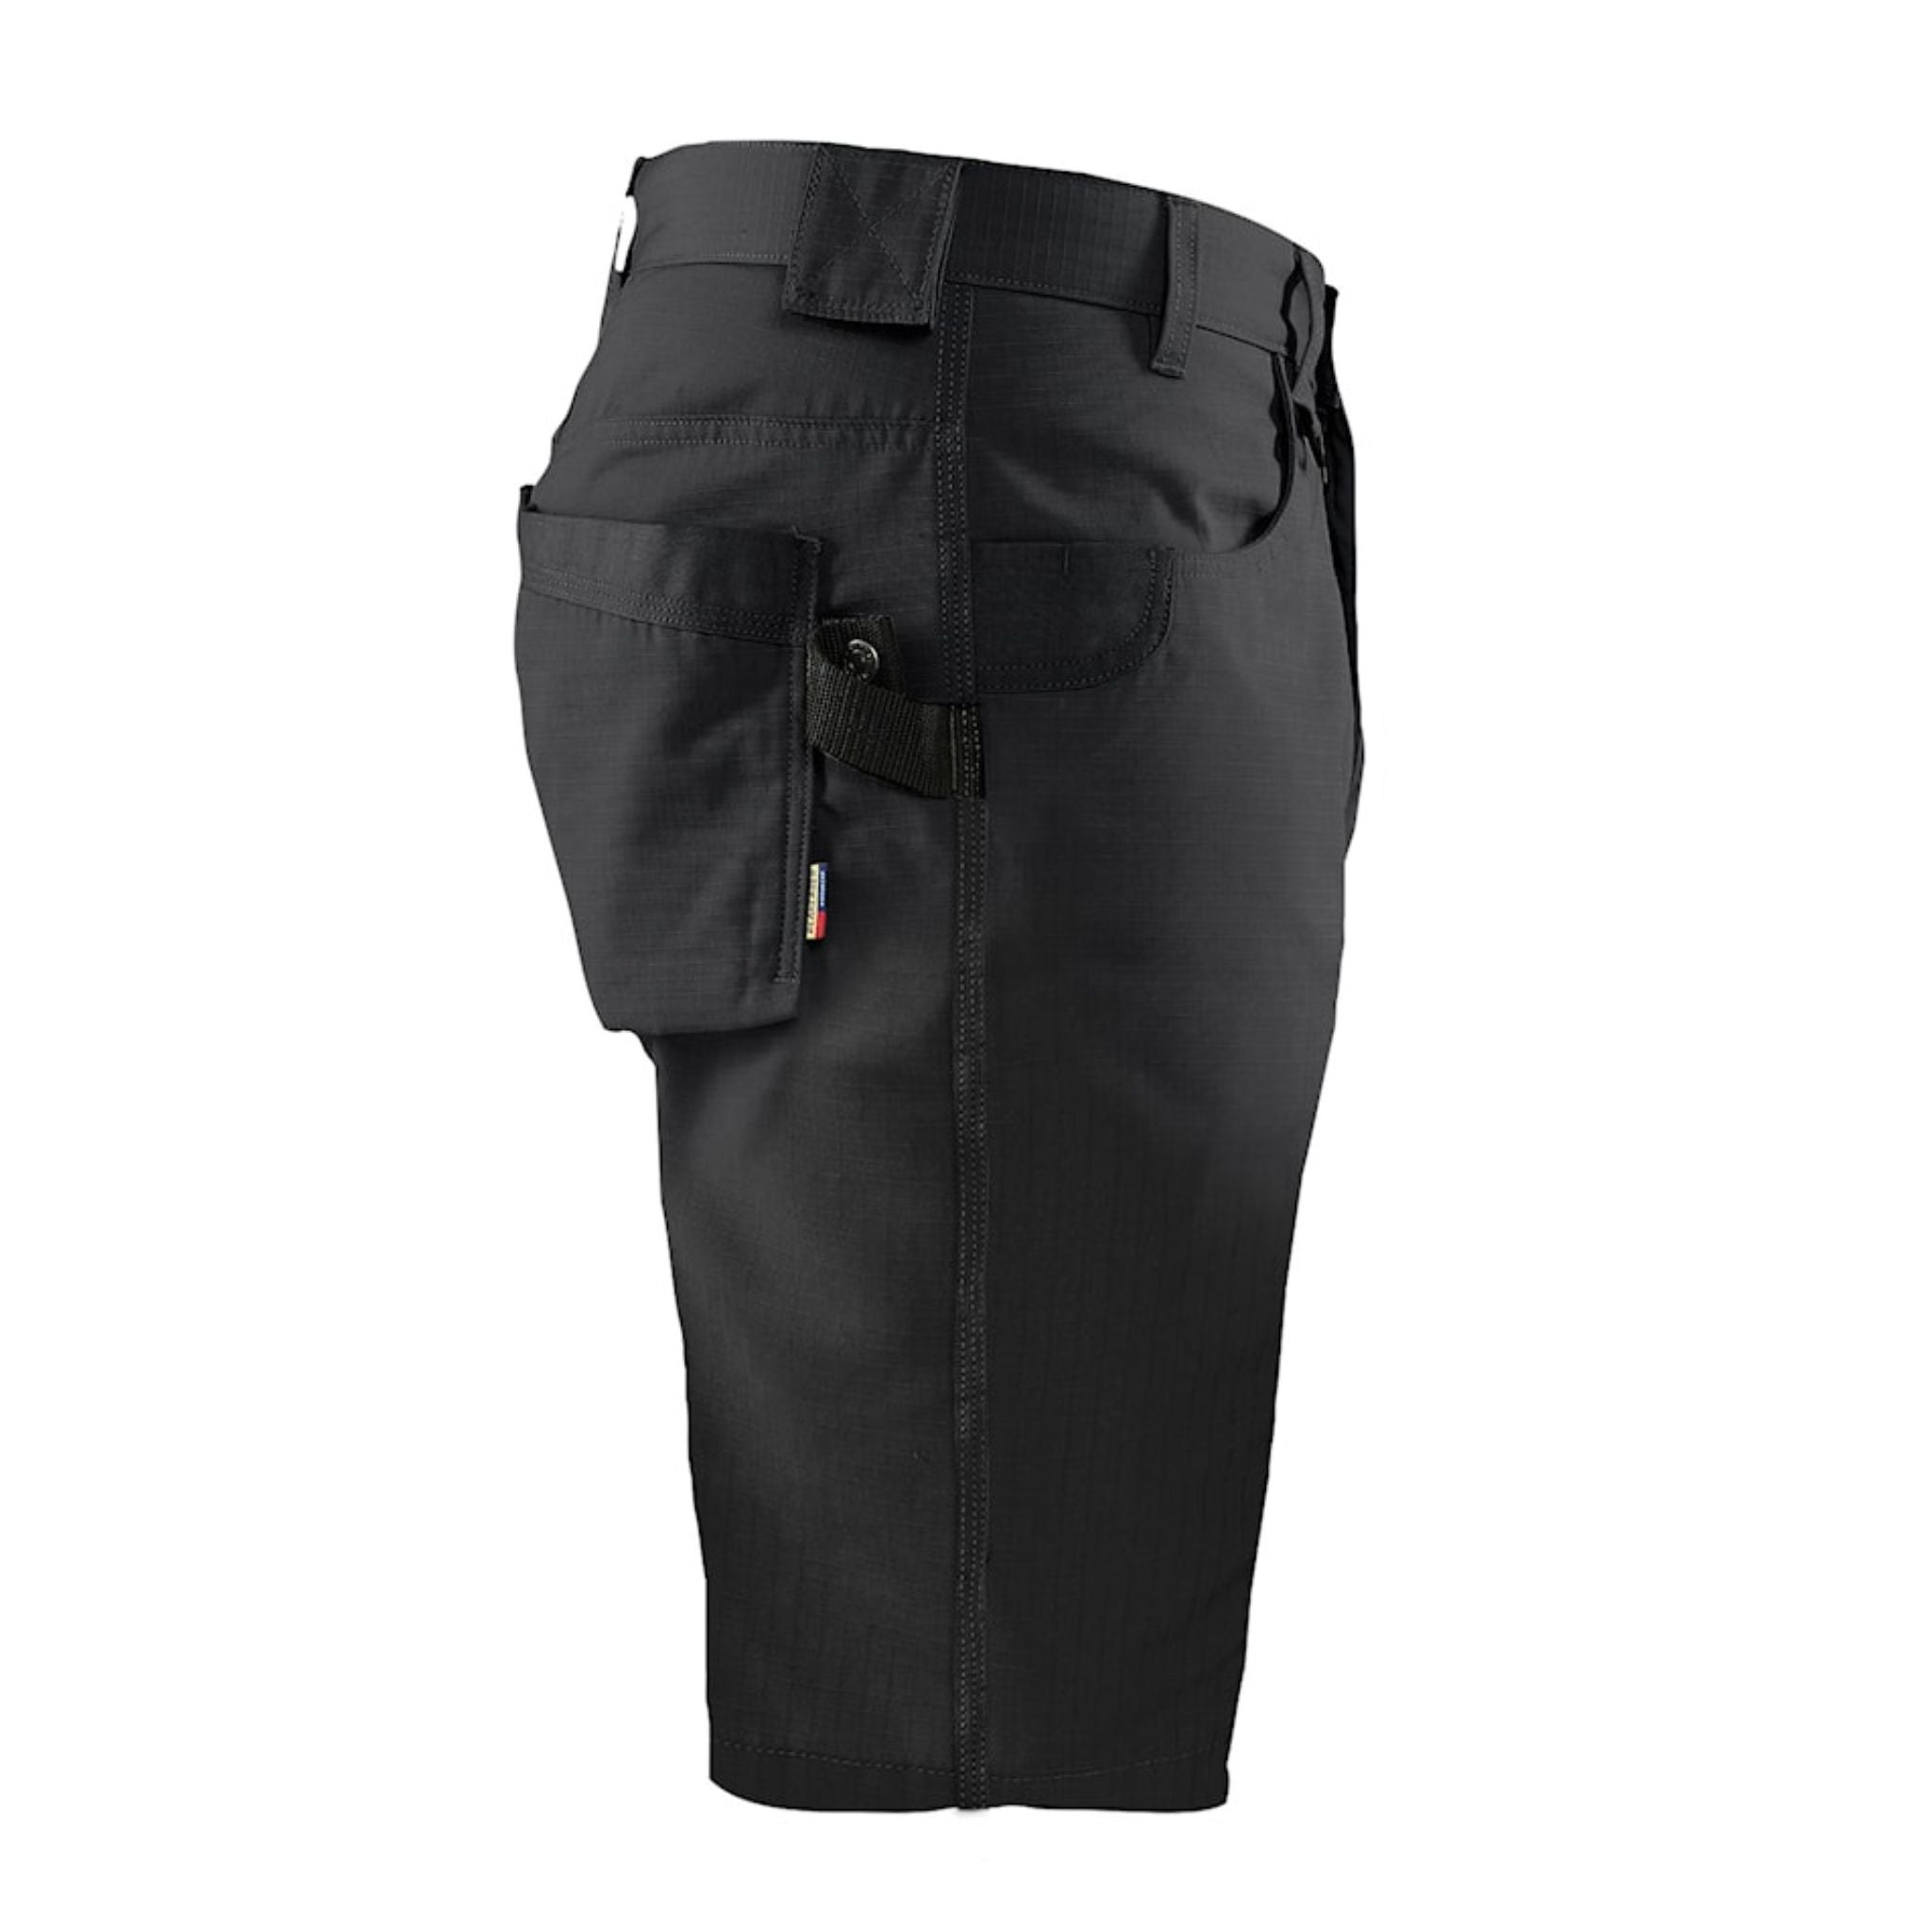 Men's black ripstop tool shorts